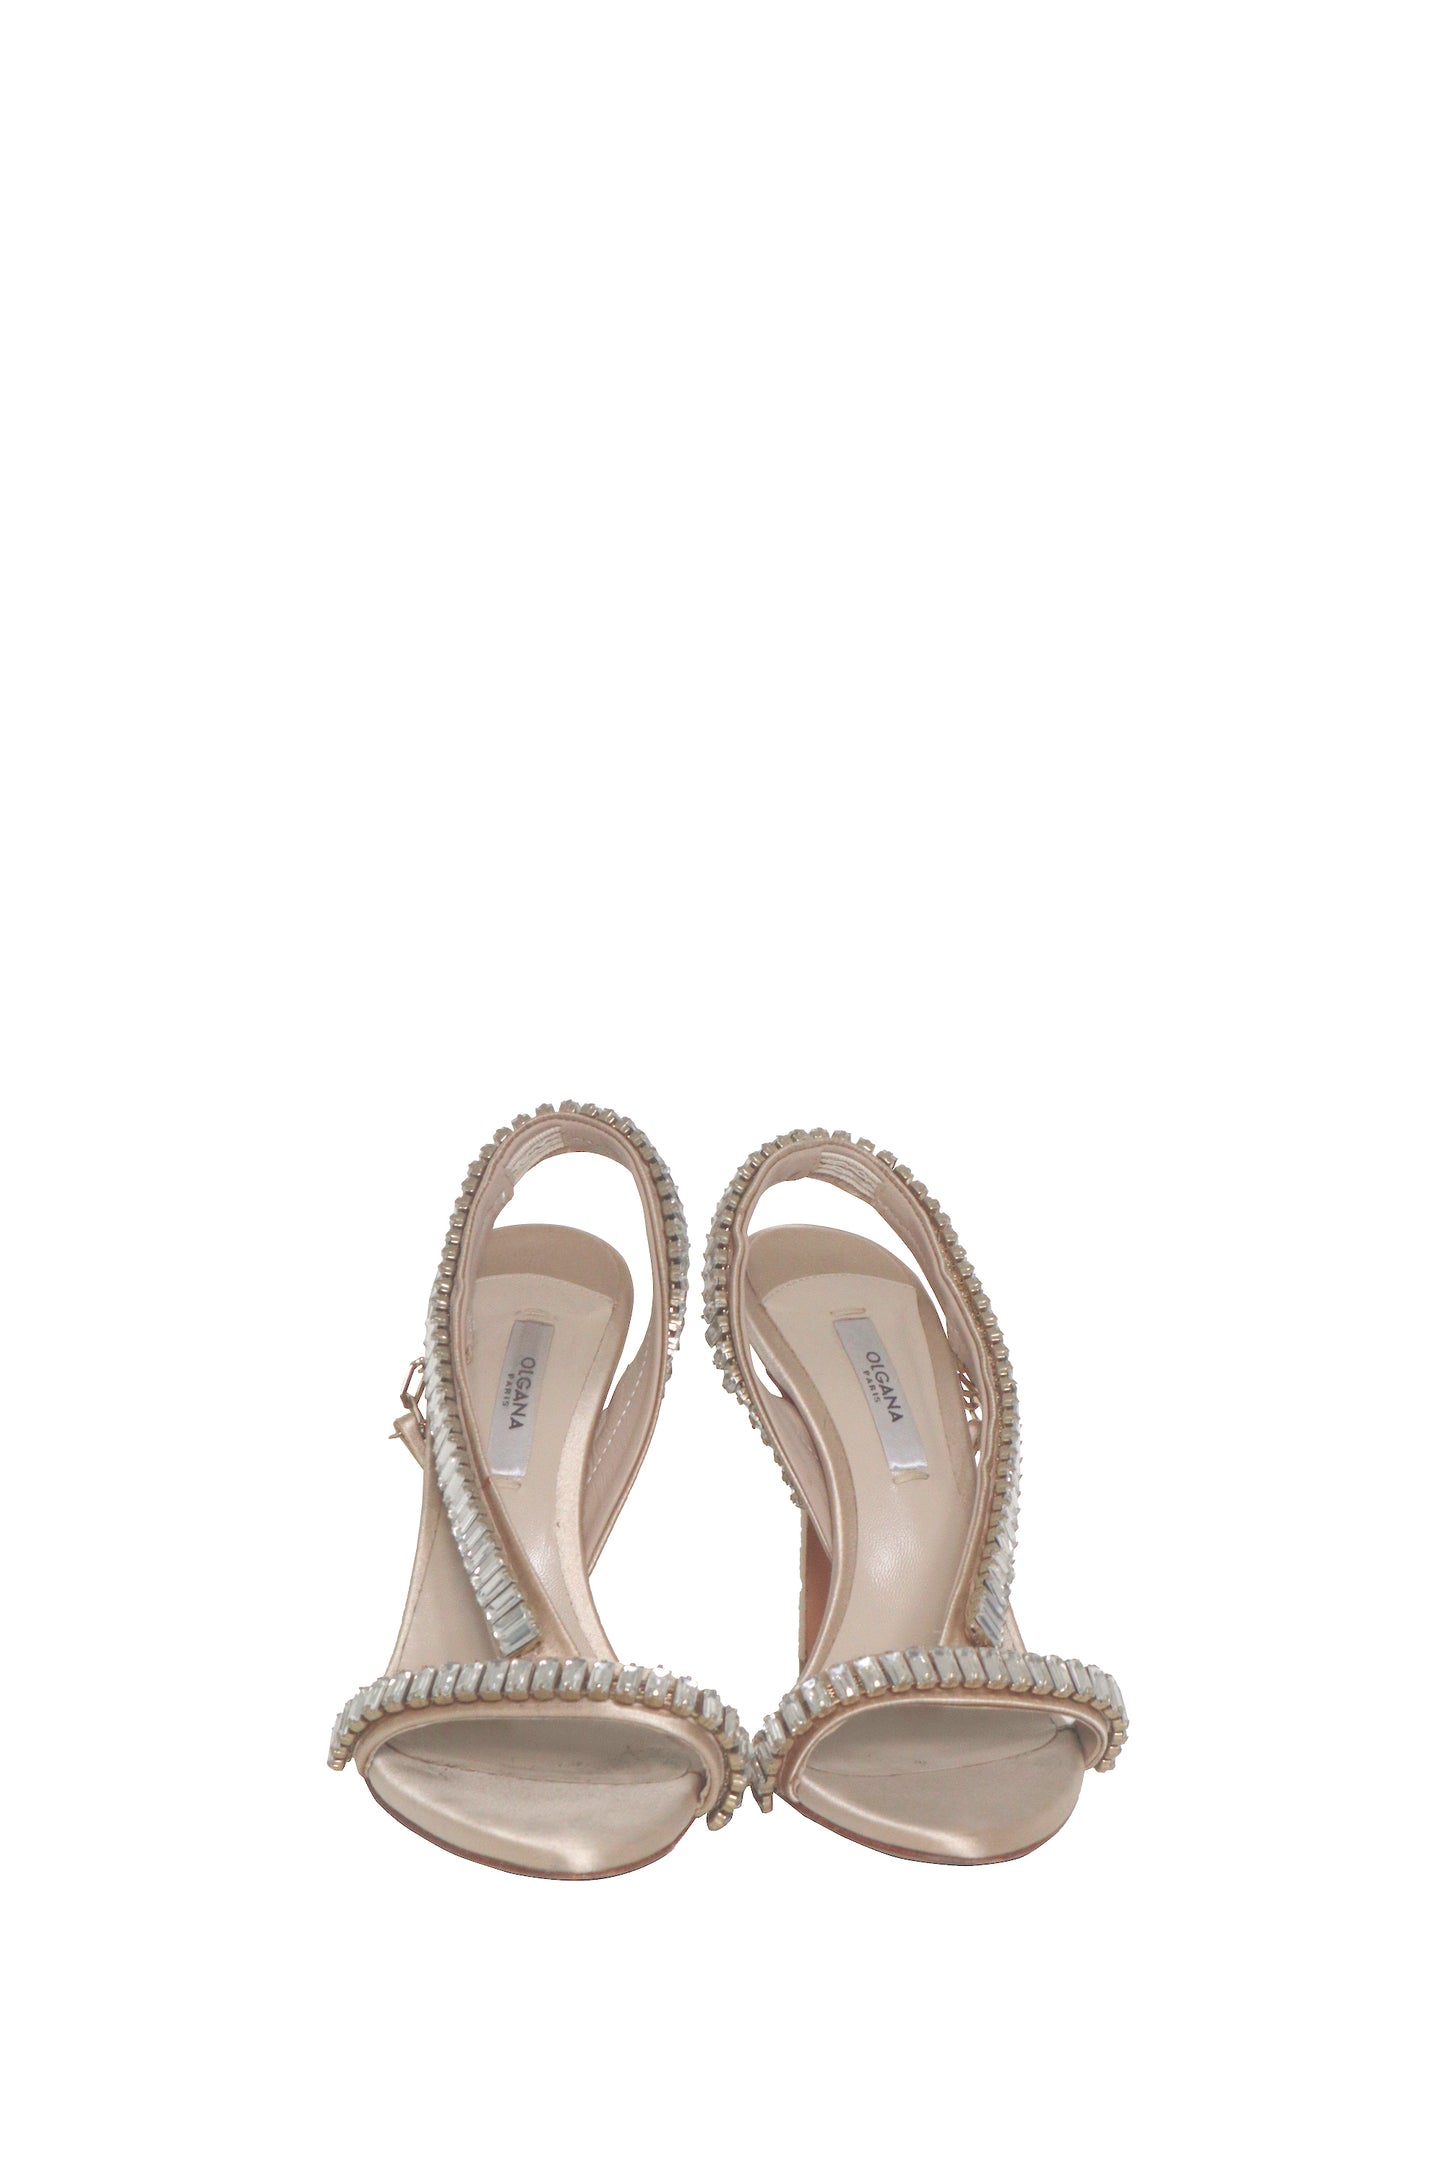 OLGANA PARIS - Nude Crystal Heel Sandals - Size 37.5